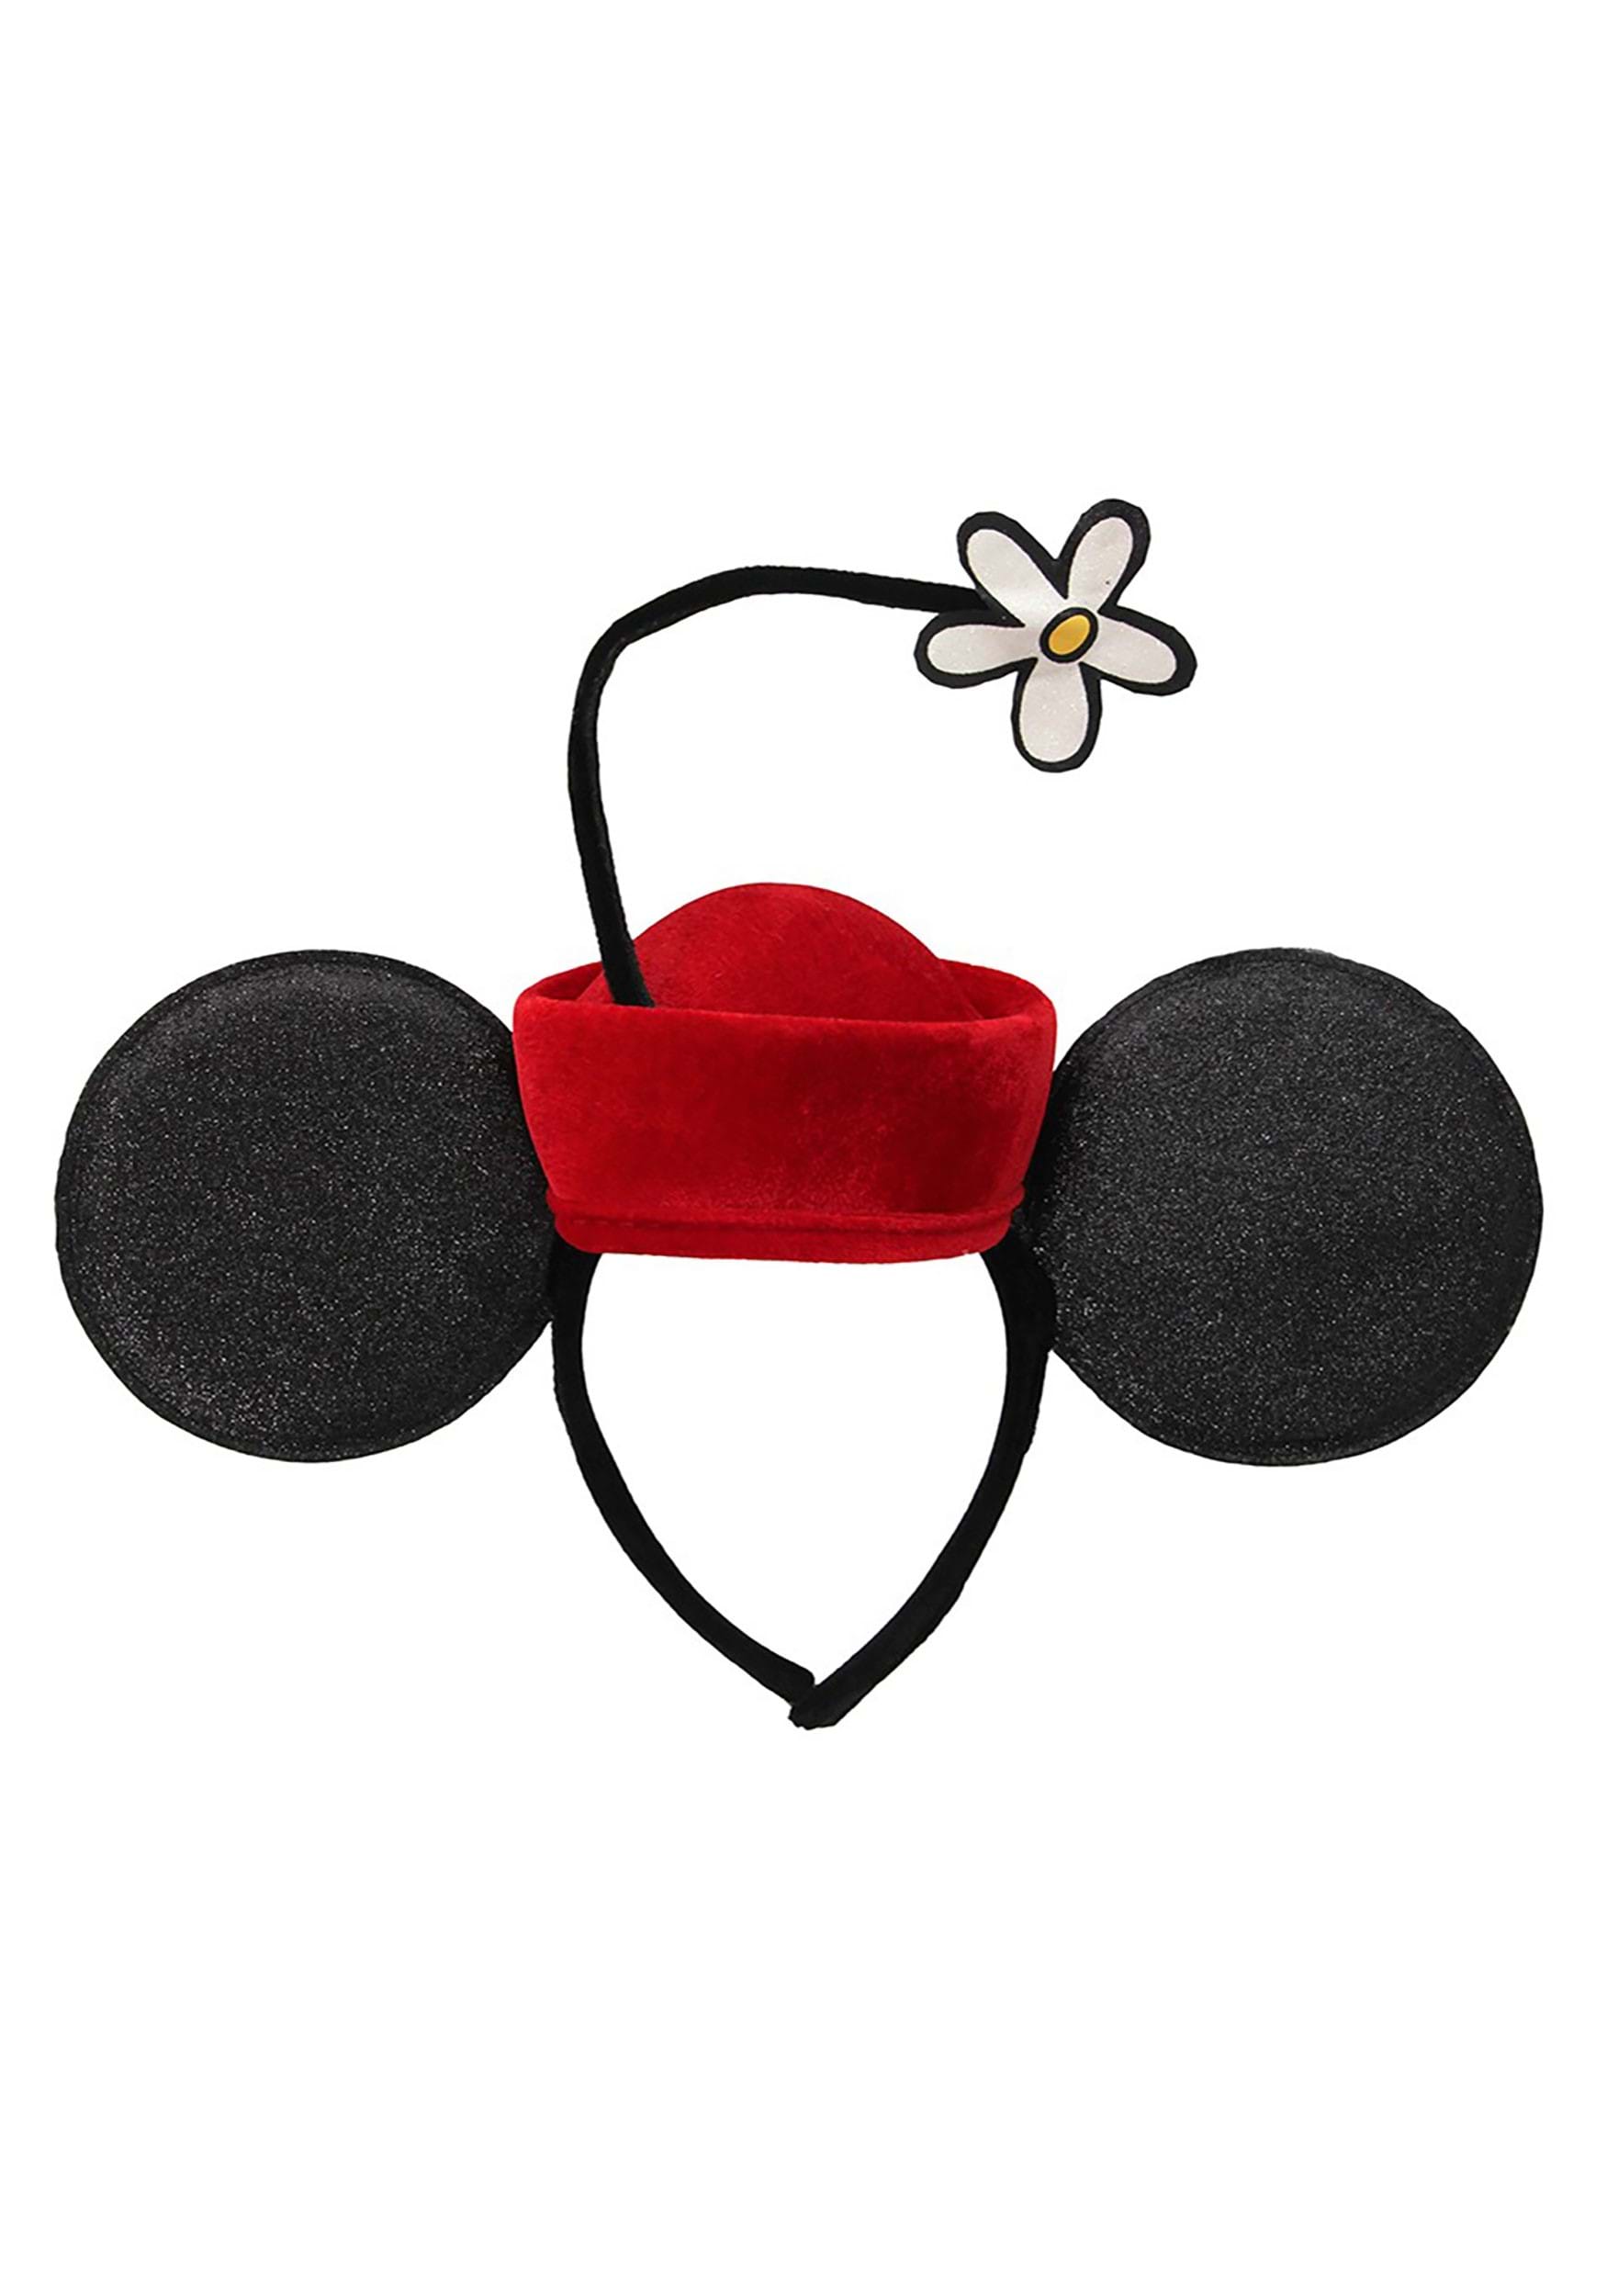 Disney Classic Minnie Mouse